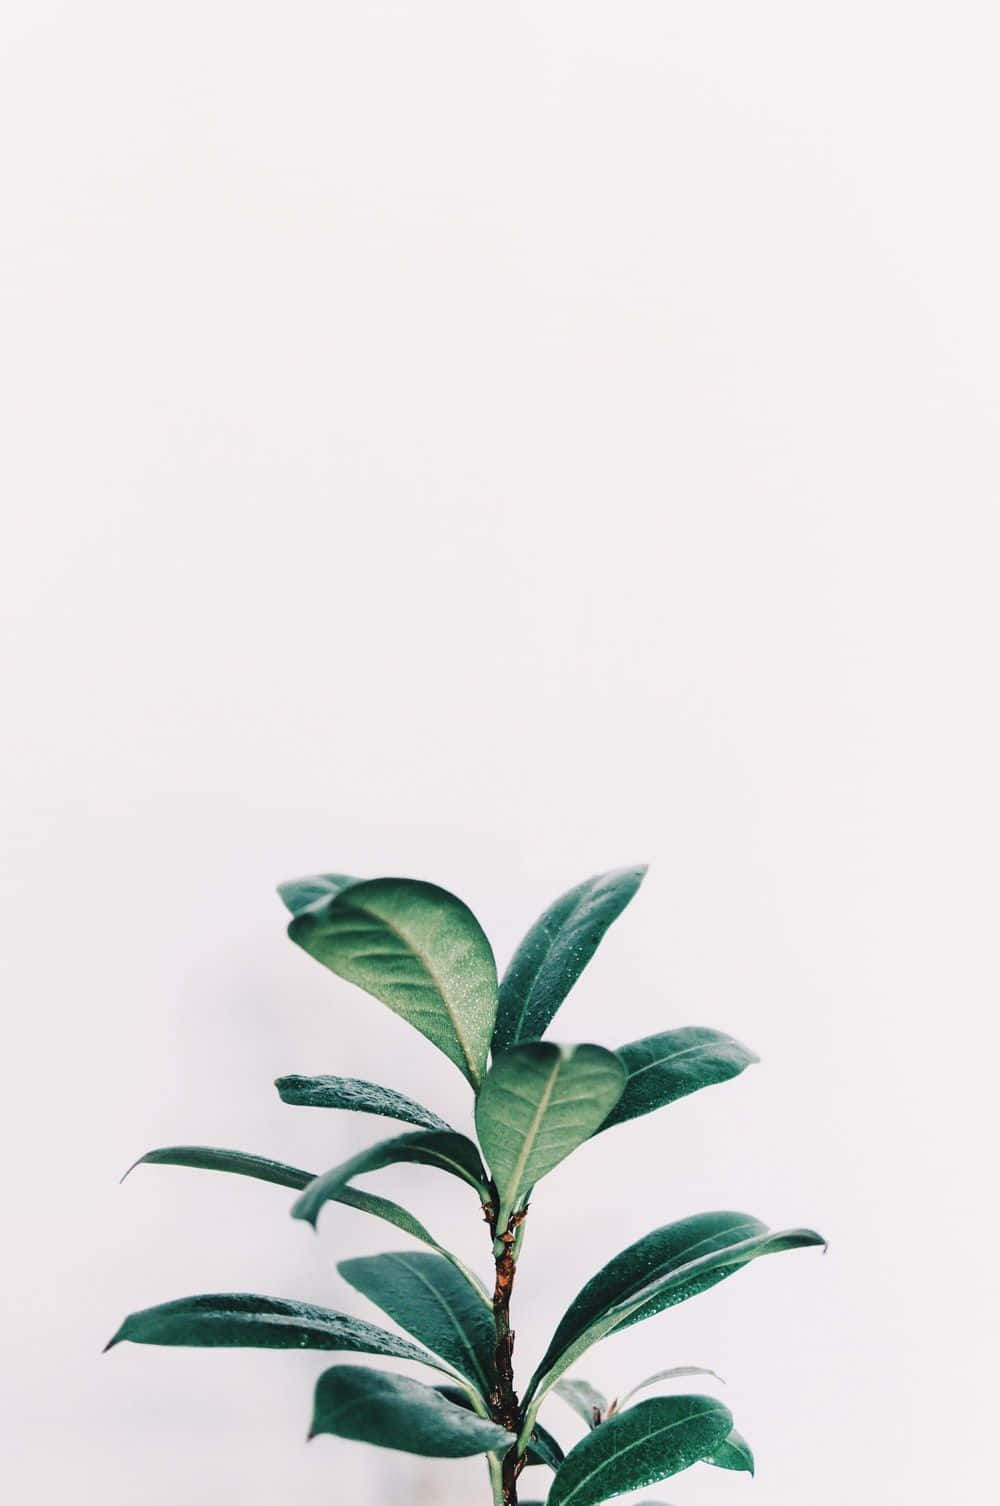 “Enjoy the minimalist aesthetic of an iPhone.” Wallpaper